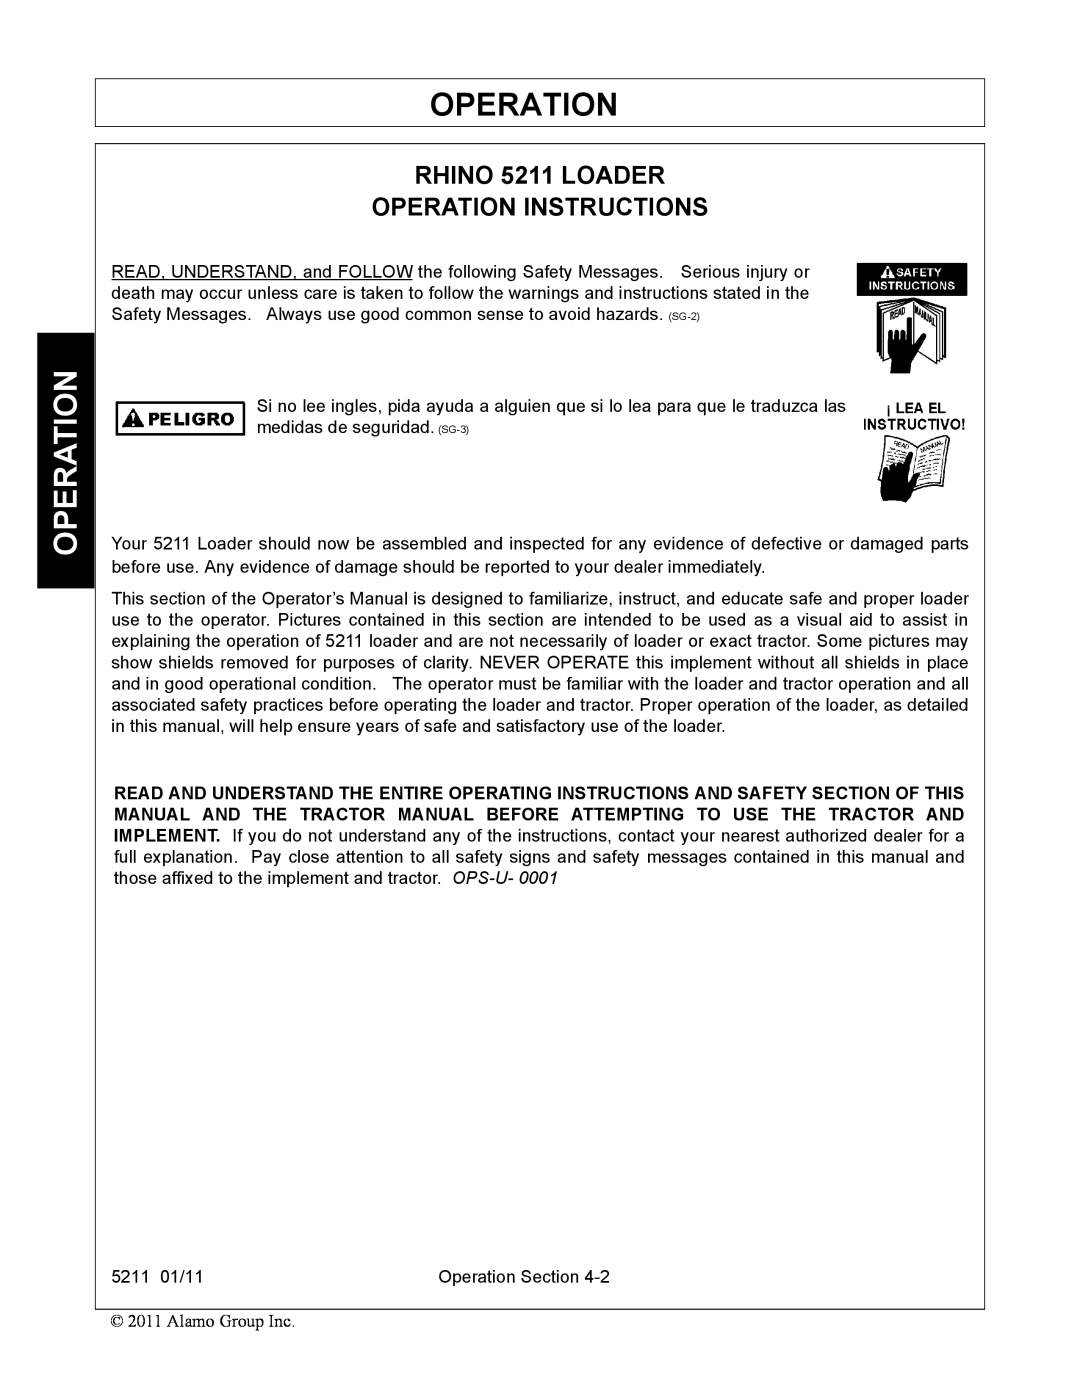 Servis-Rhino manual Operation, RHINO 5211 LOADER OPERATION INSTRUCTIONS 